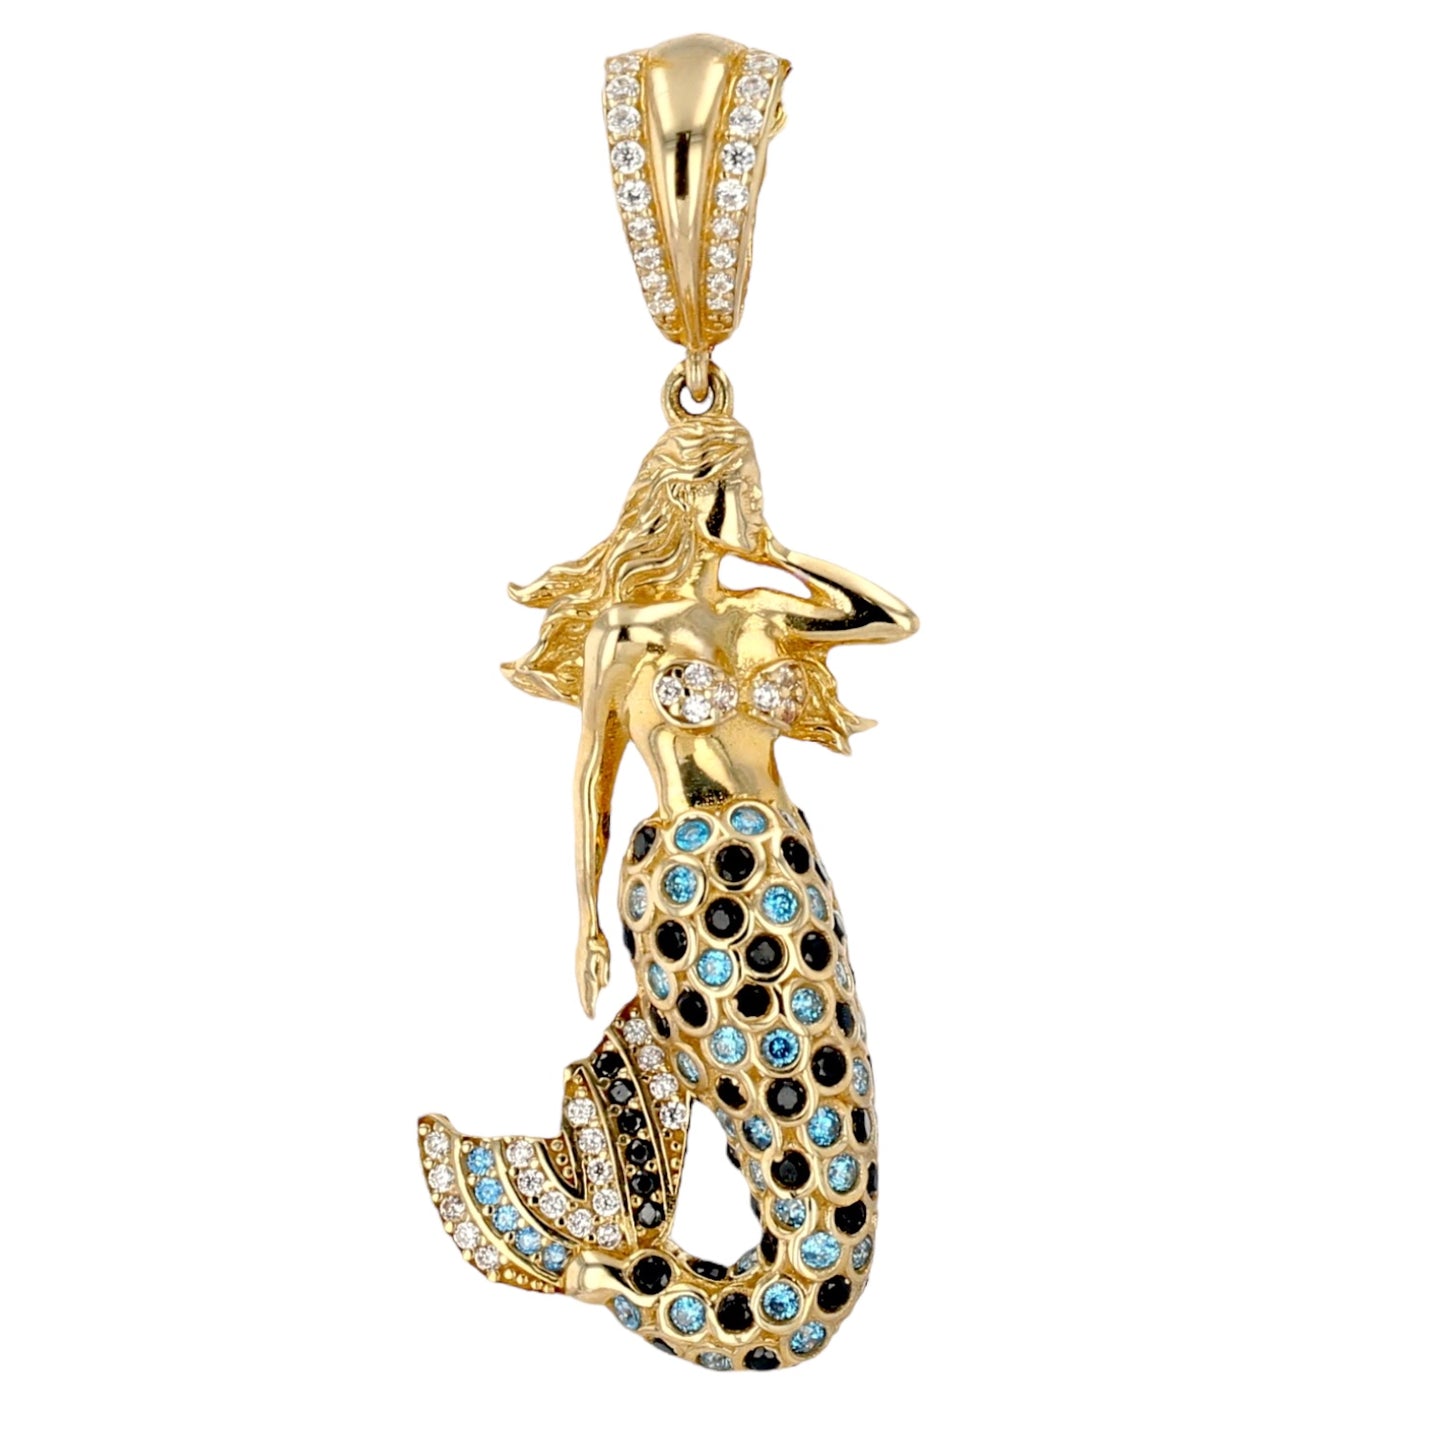 10K yellow gold rope choker with mermaid pendant-225321